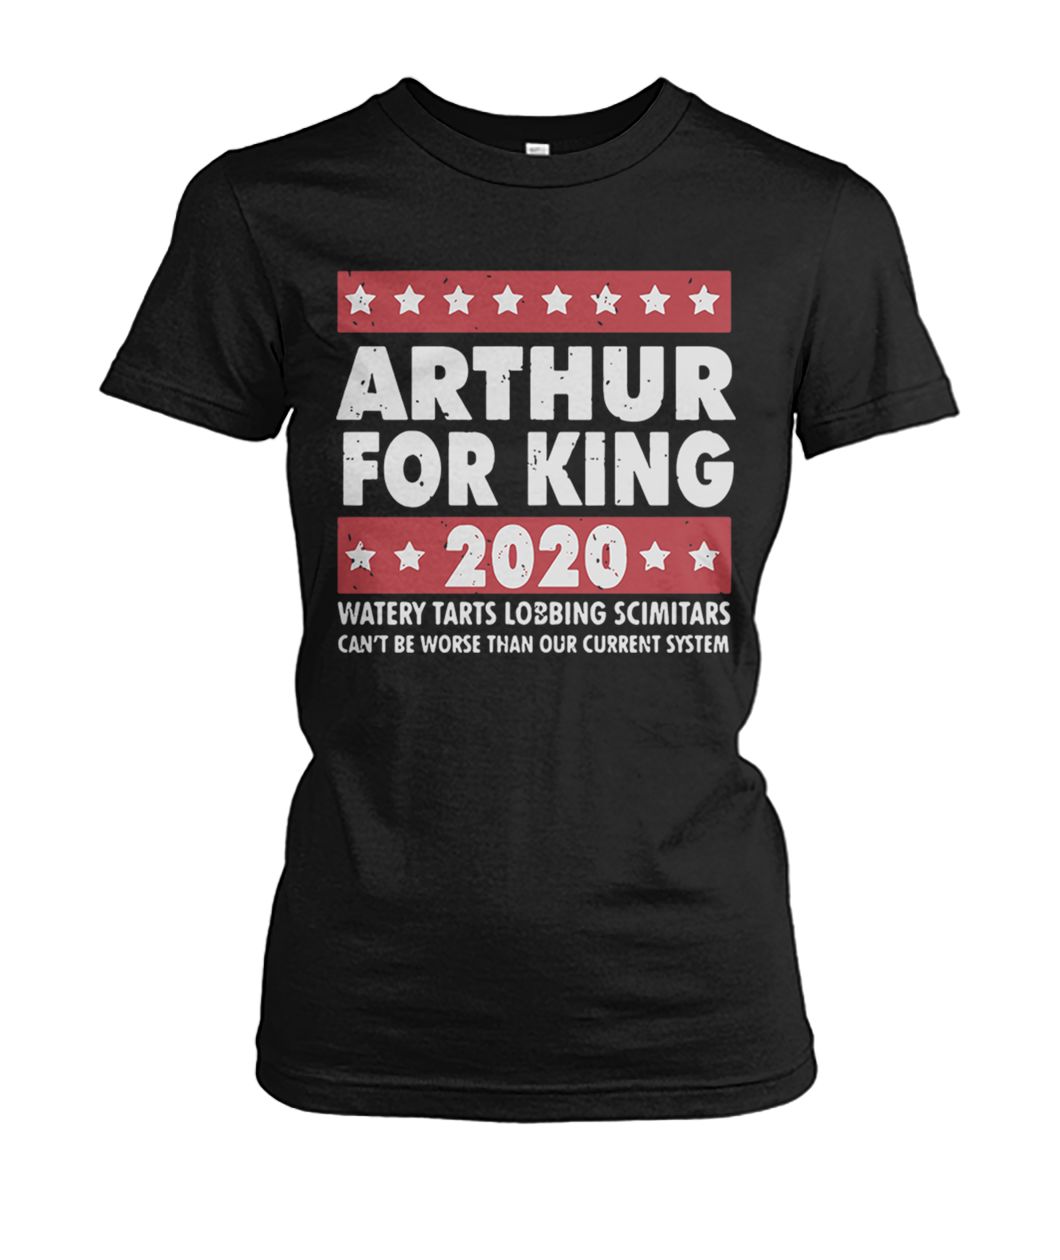 Arthur for king 2020 watery tarts lobbing scimitars women's crew tee